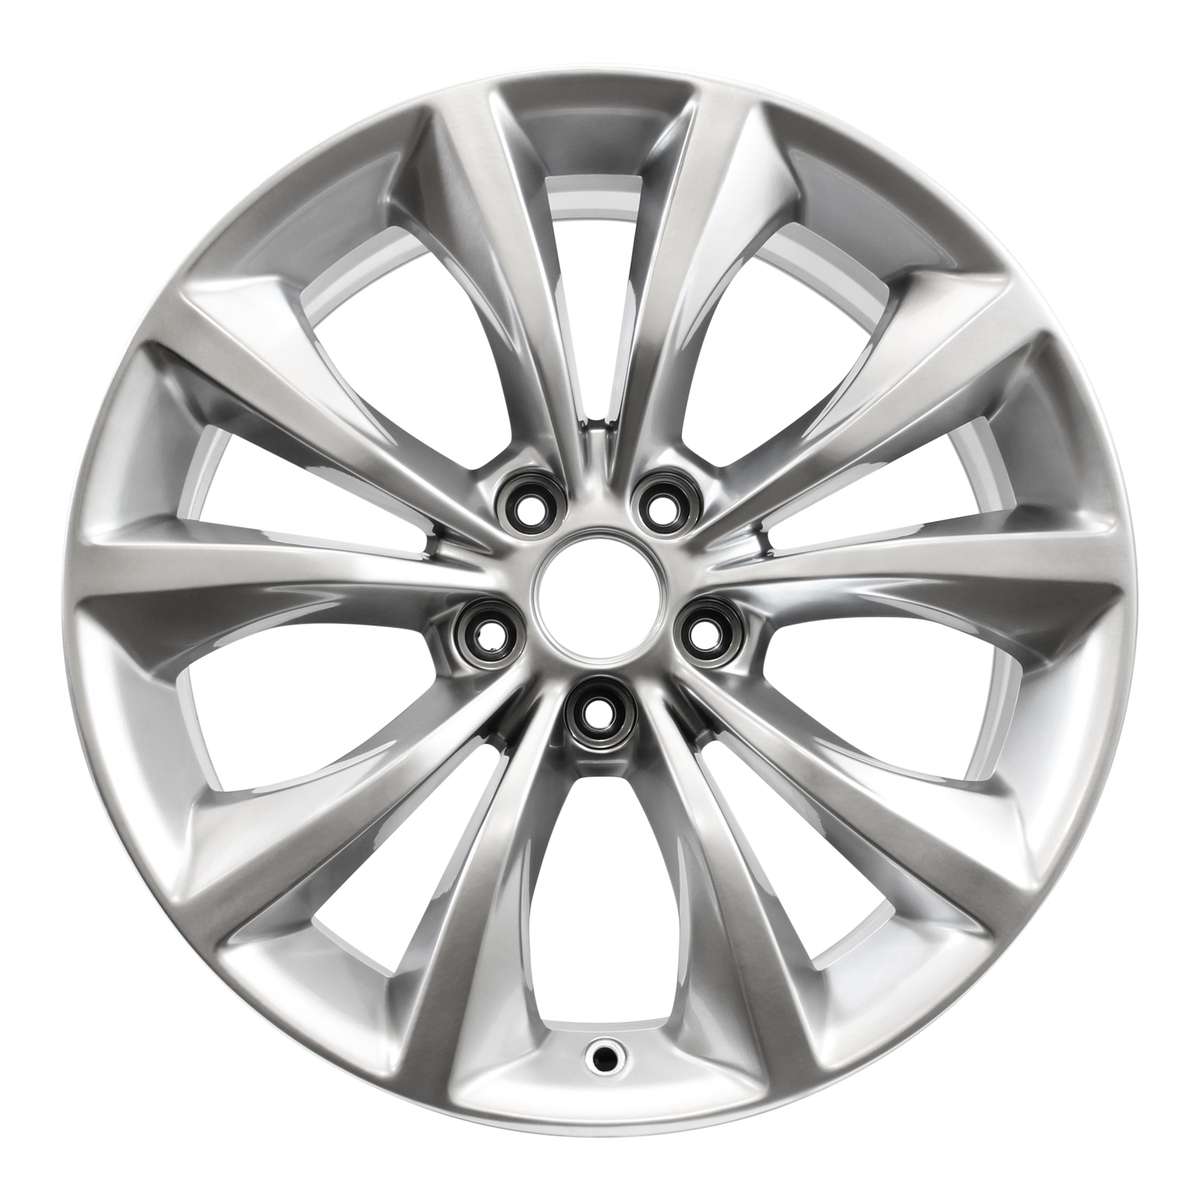 2016 Chrysler 200 18" OEM Wheel Rim W2516H